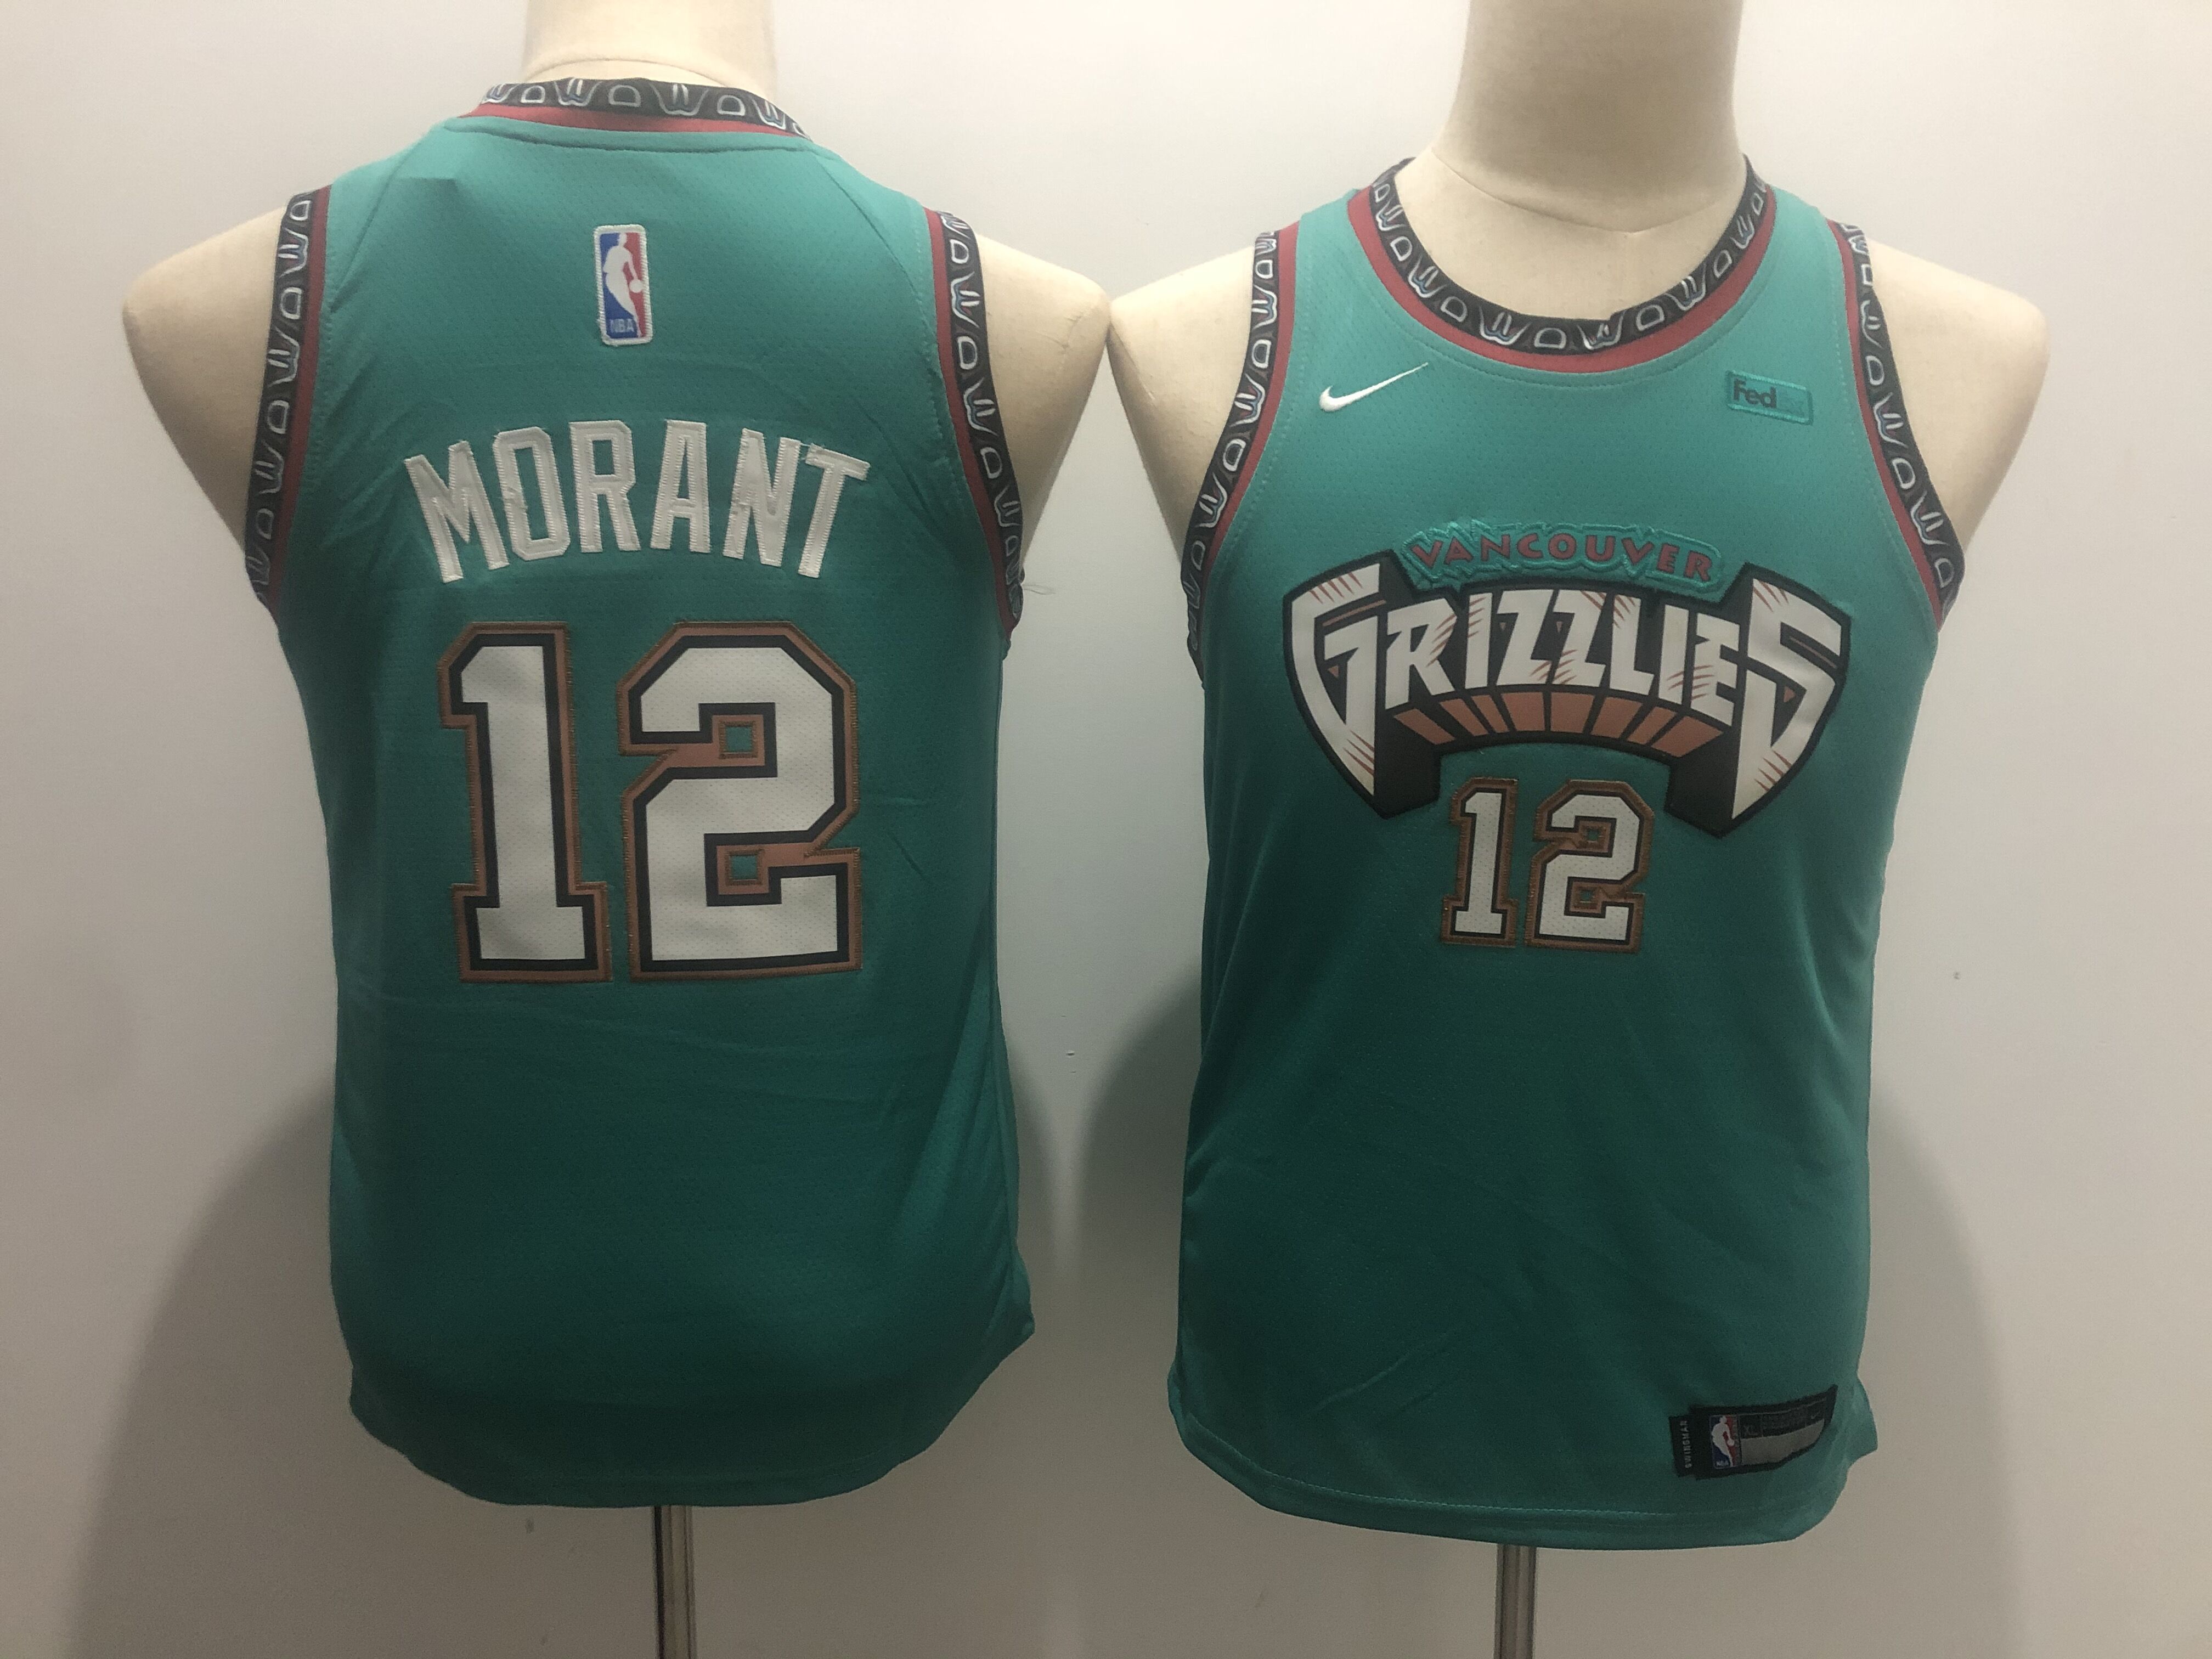 Youth Memphis Grizzlies #12 Morant green Nike NBA Jerseys